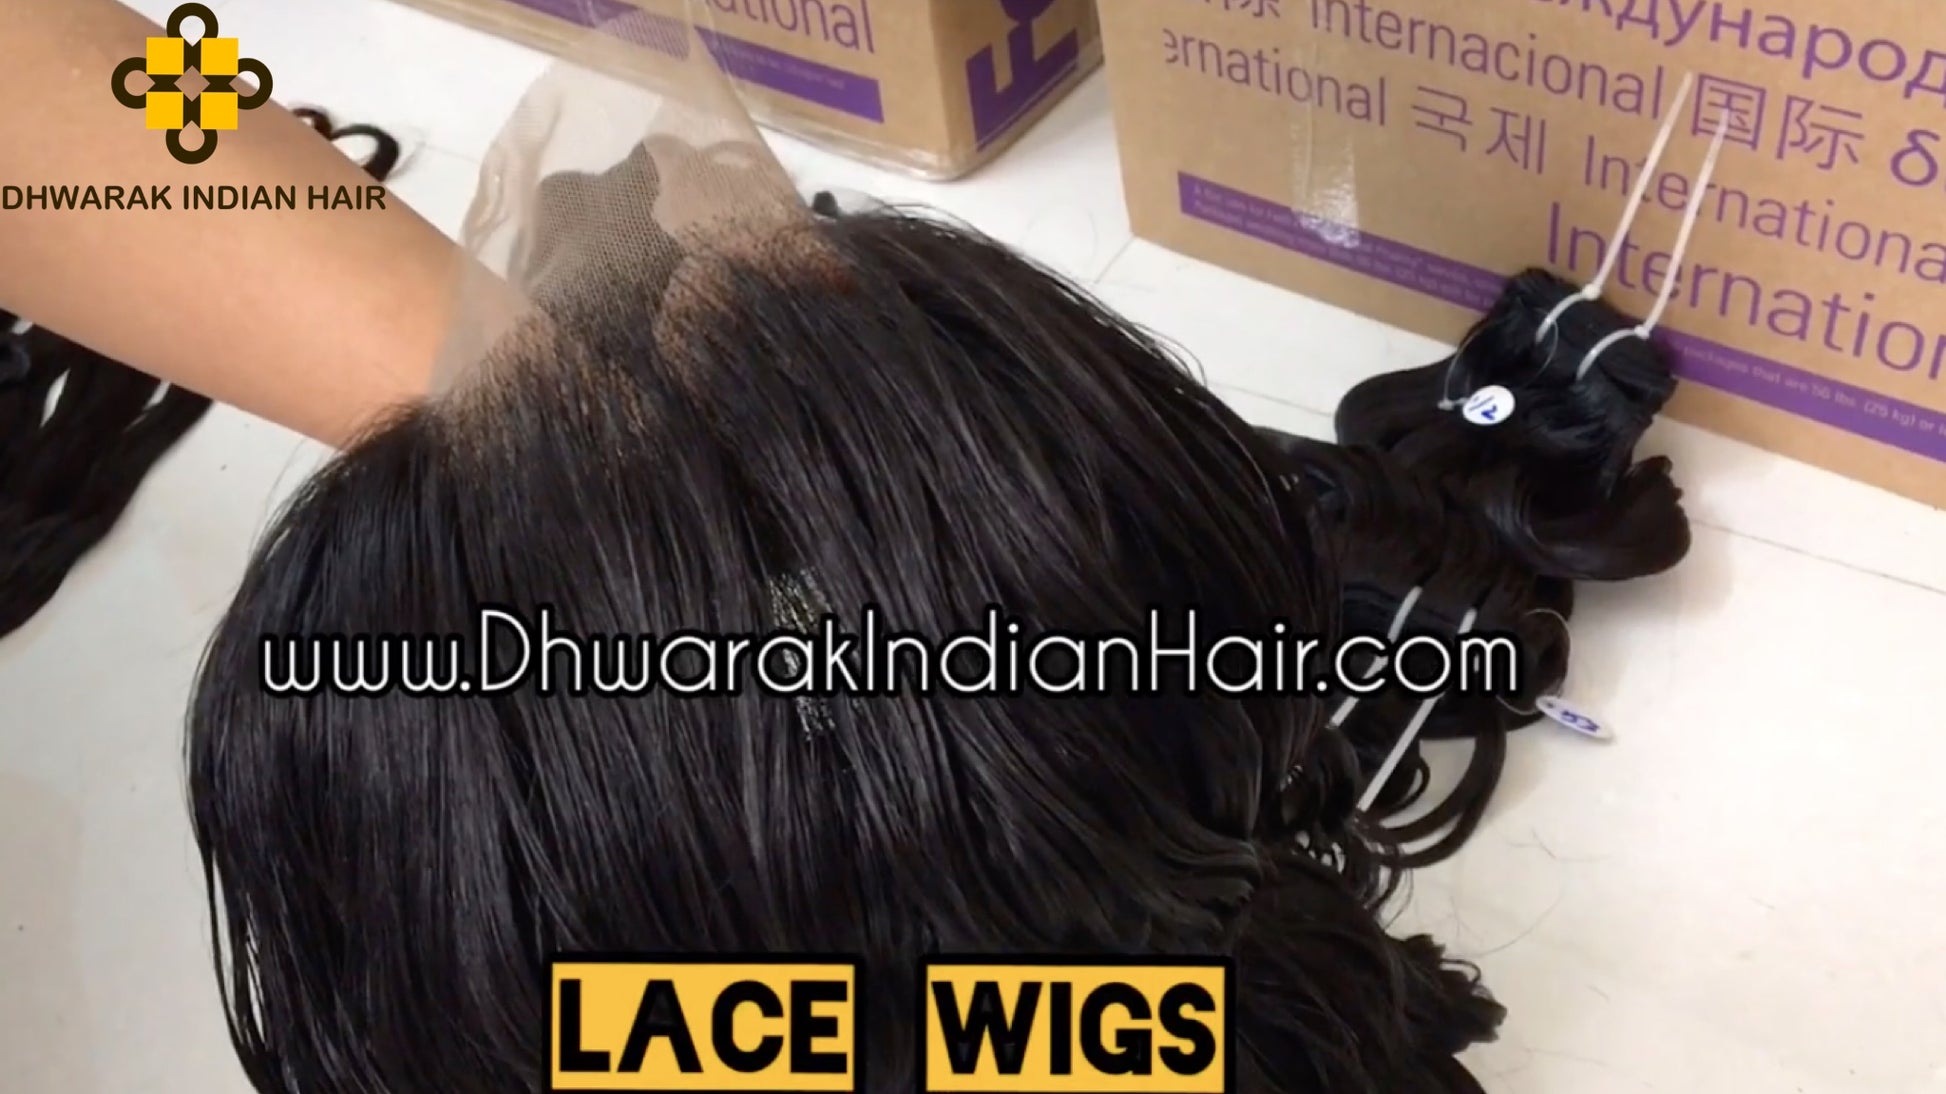 HD Lace wigs